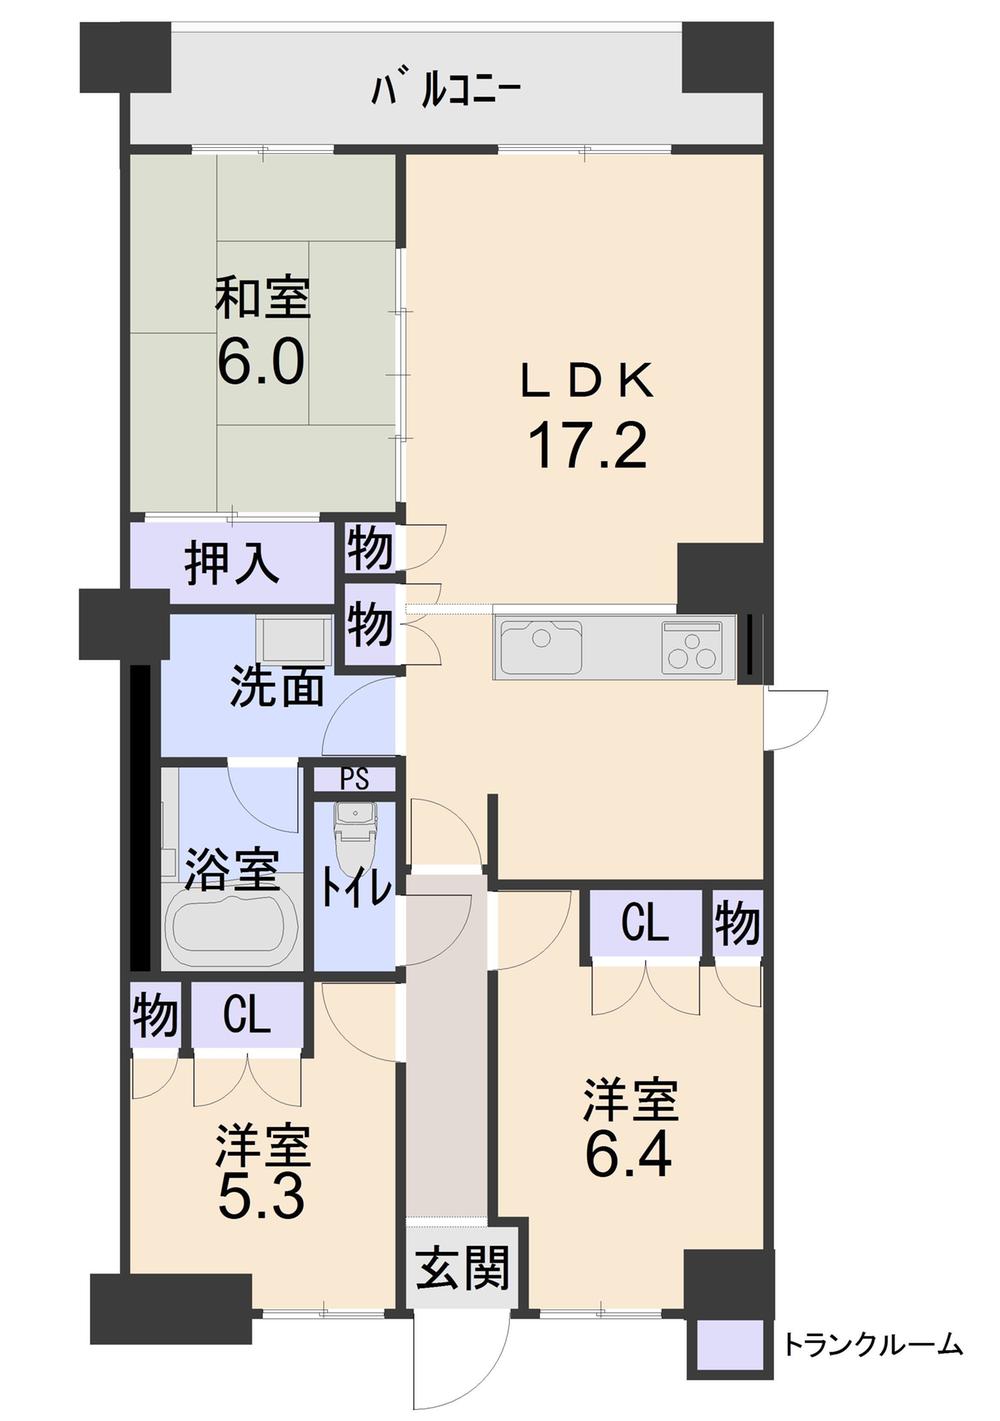 Floor plan. 3LDK, Price 19.2 million yen, Occupied area 76.99 sq m , Balcony area 11.7 sq m